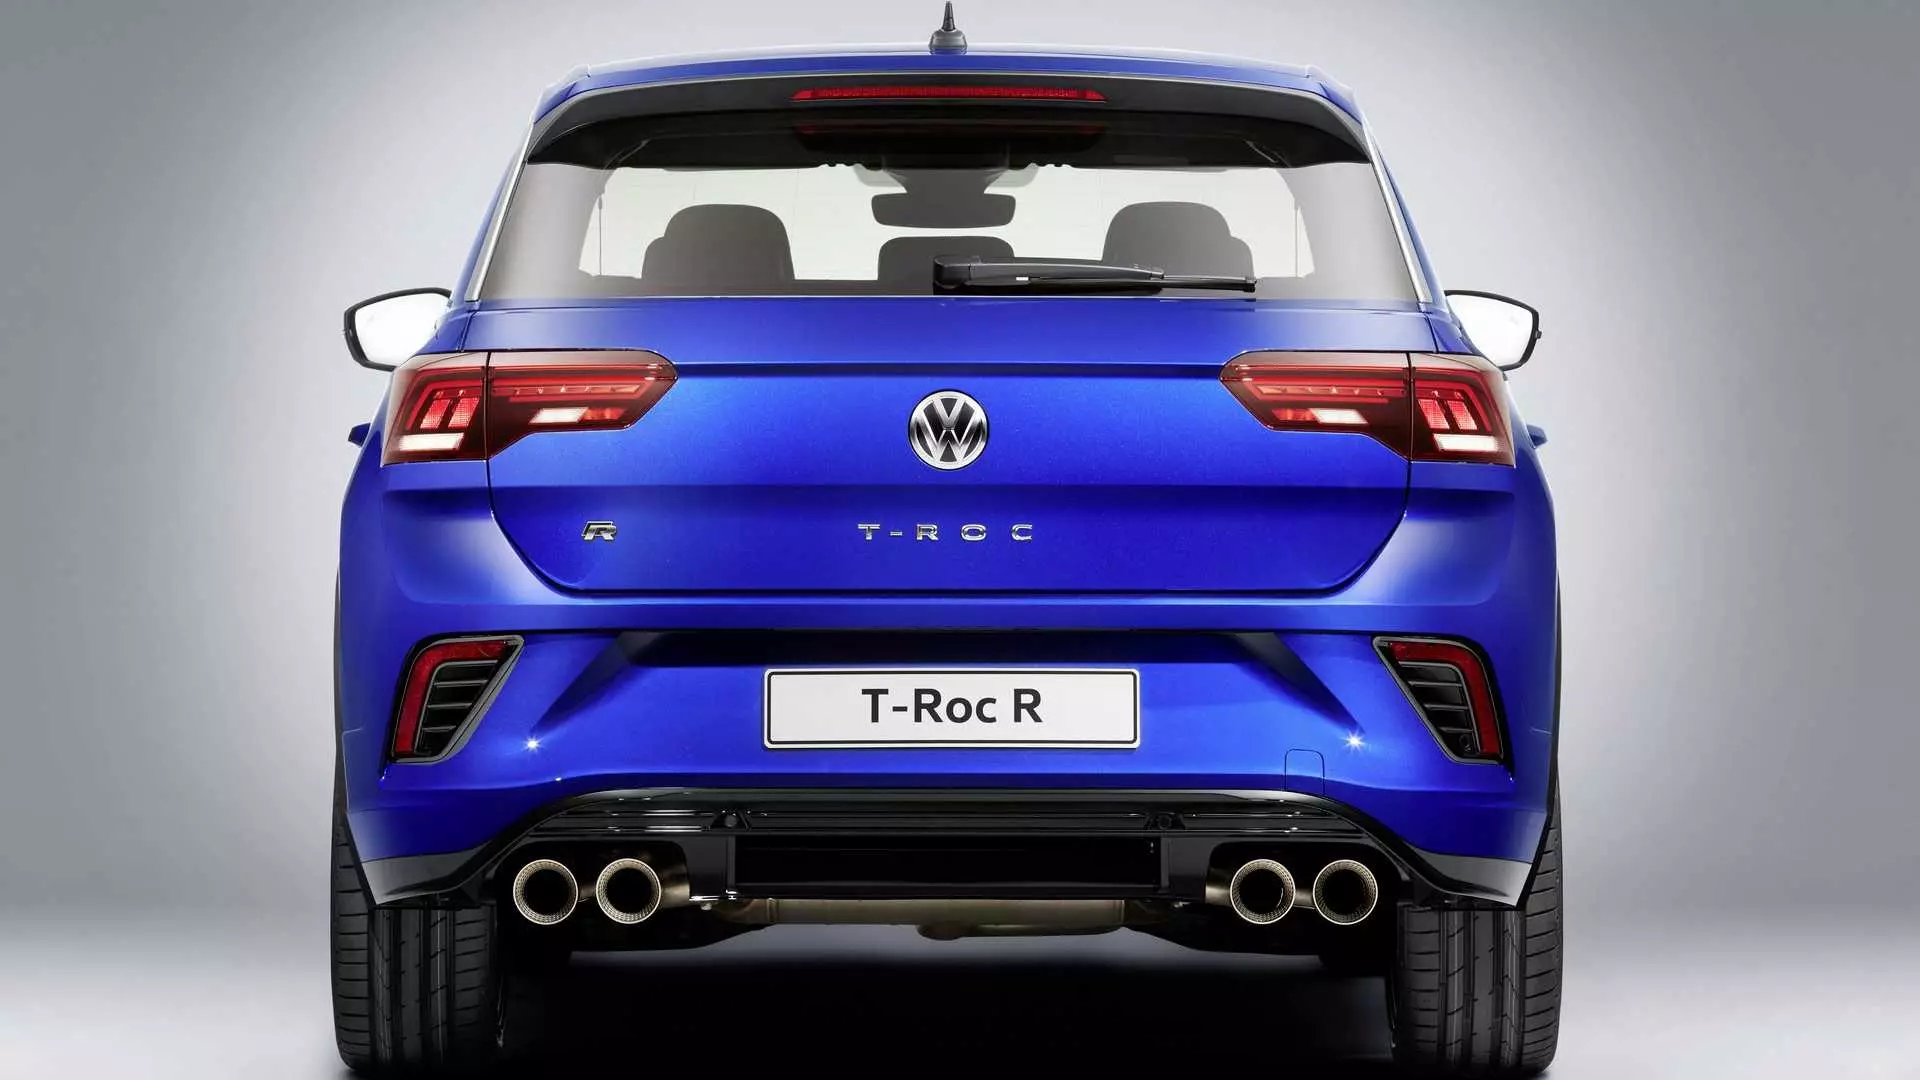 O Volkswagen T-Roc R xa ten prezo en Portugal 8549_2